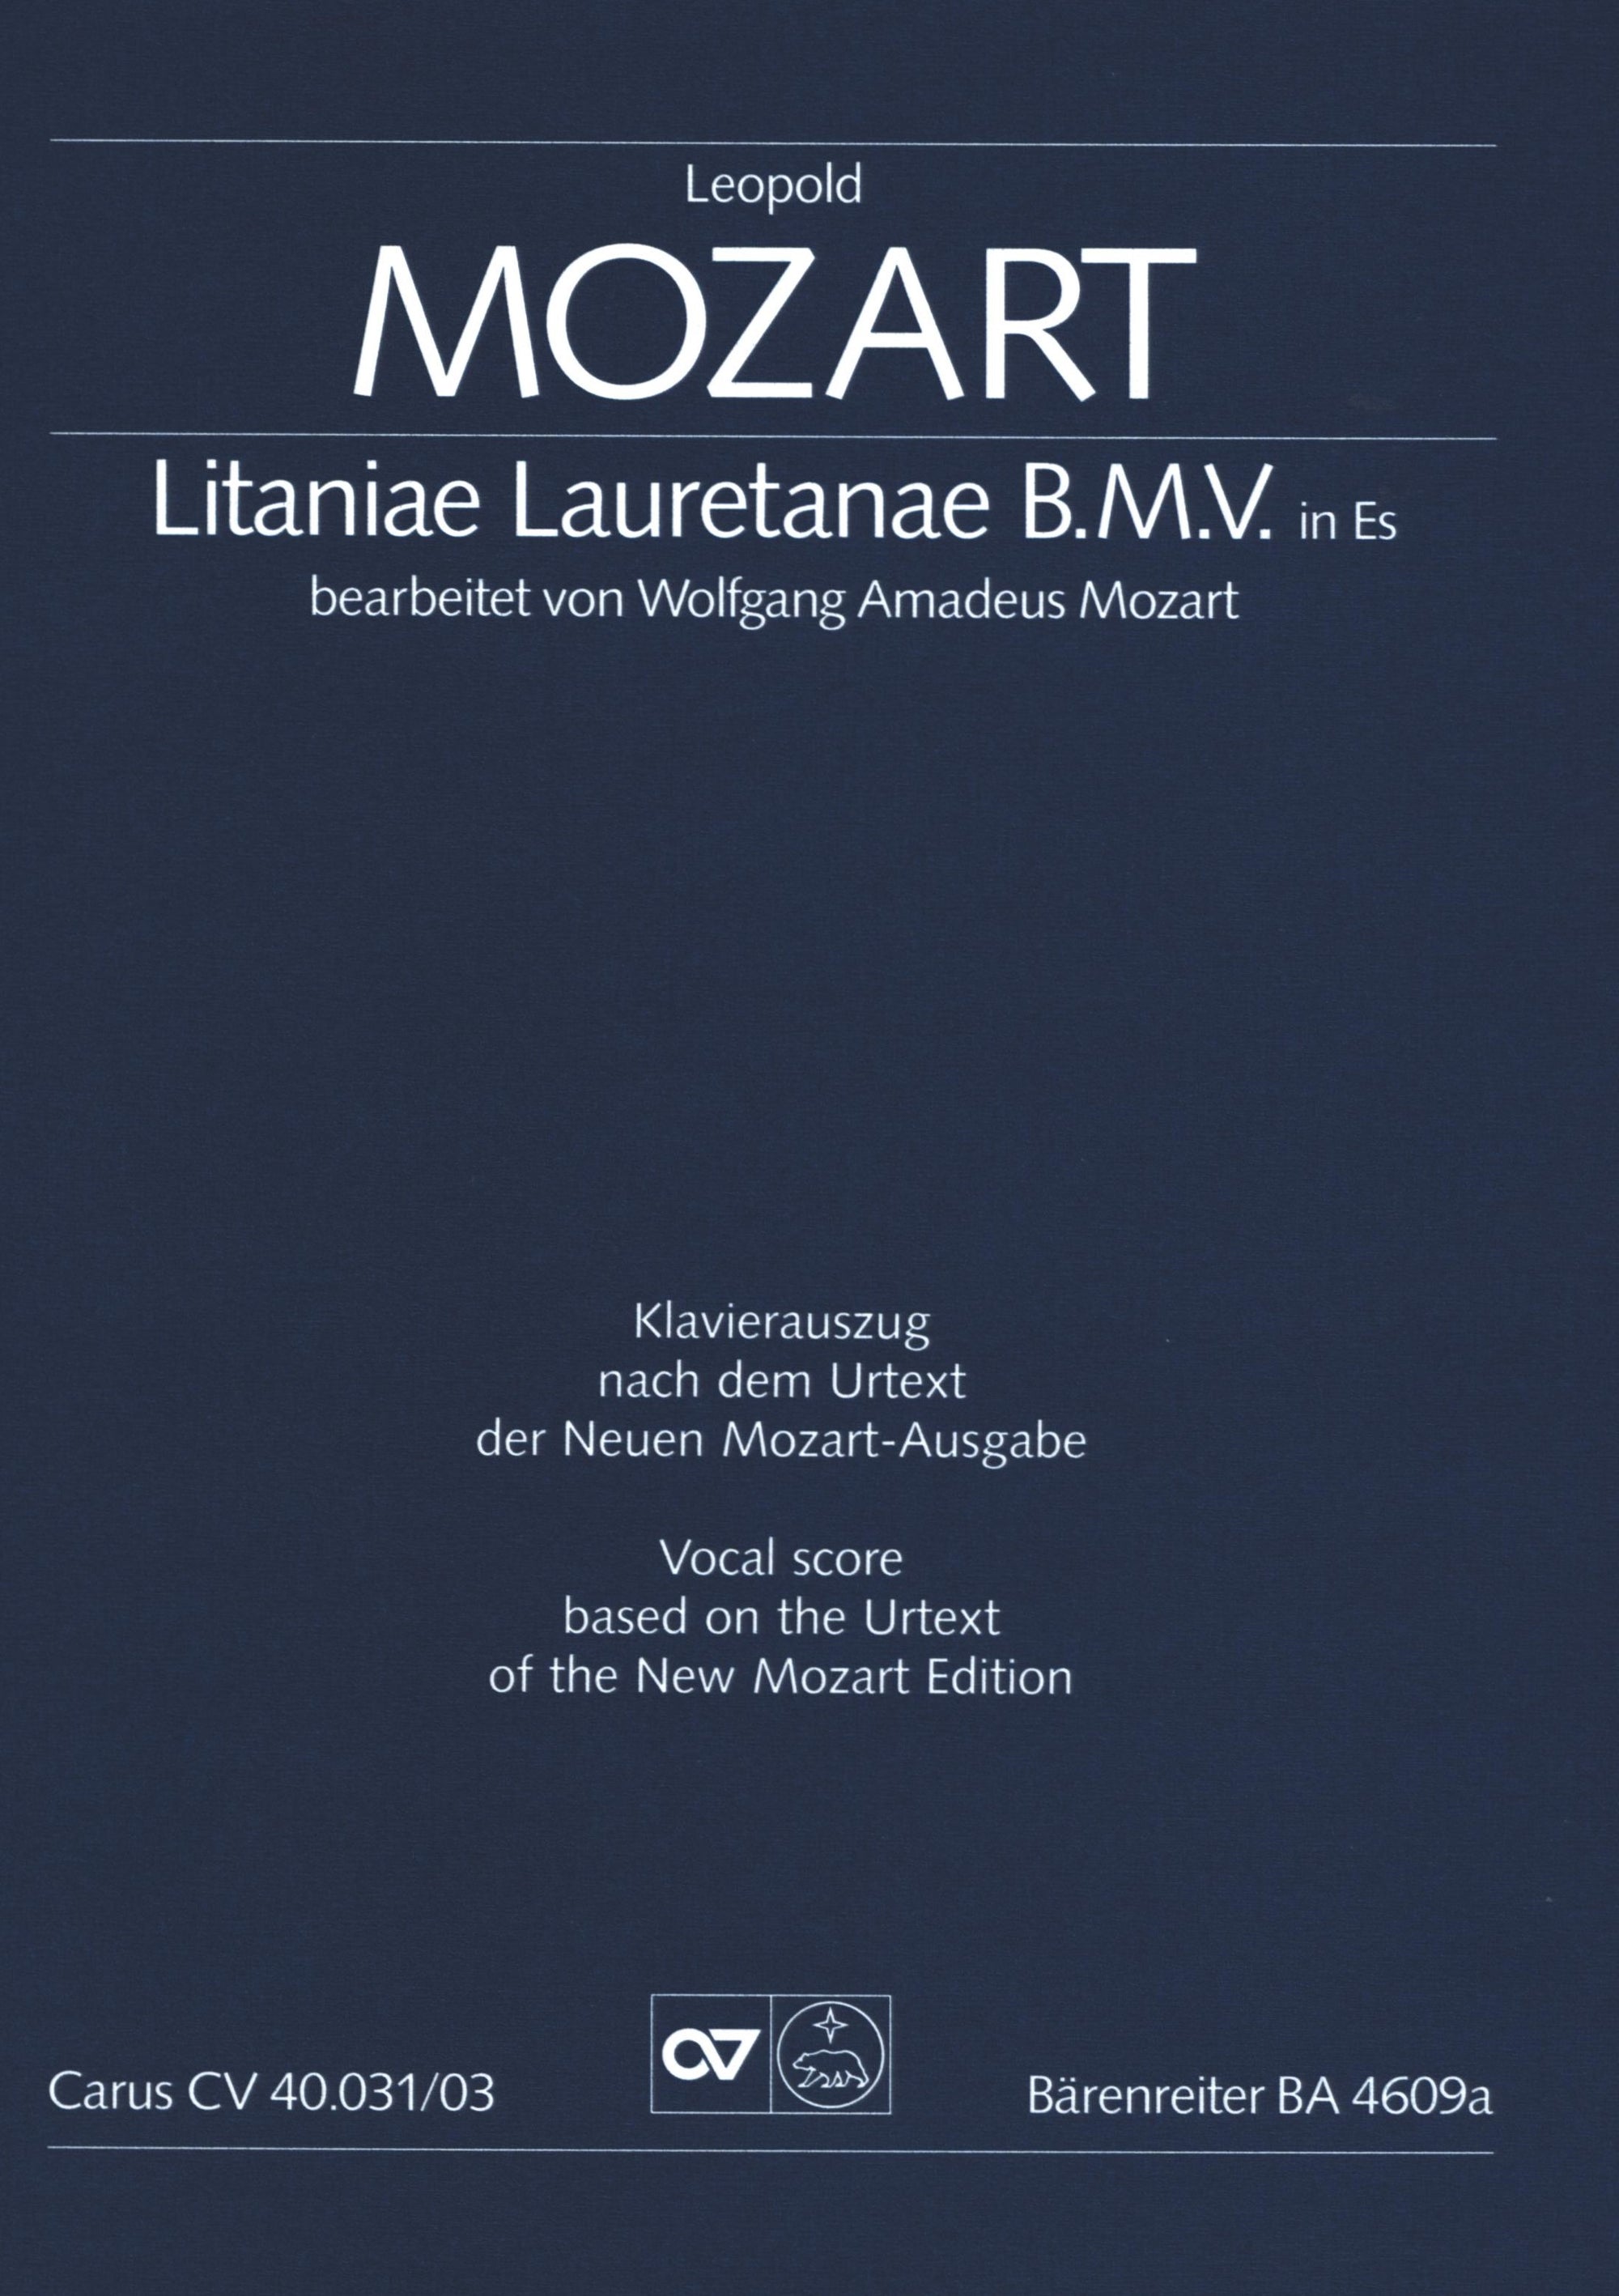 L. Mozart: Litaniae Lauretanae B.M.V in E-flat Major